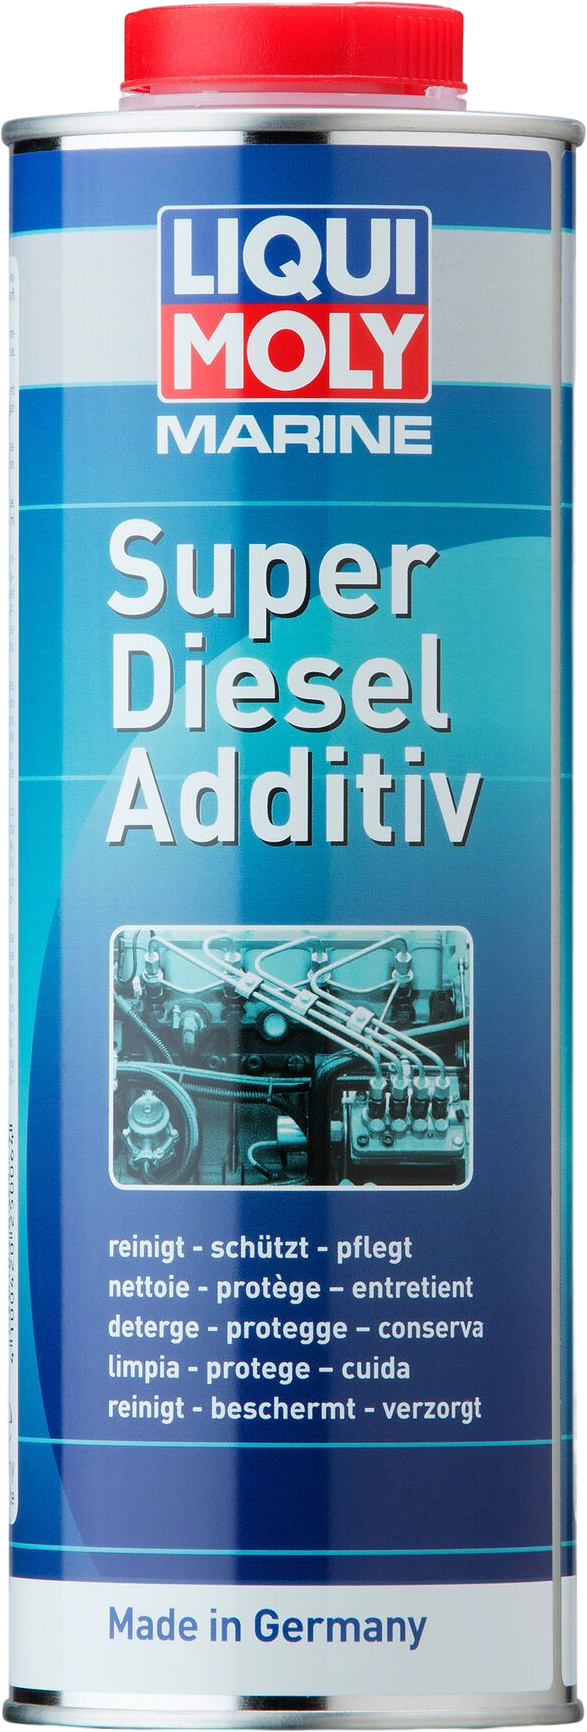 Liqui Moly Marine Super Diesel Additiv, 6 x 1 lt detail 2